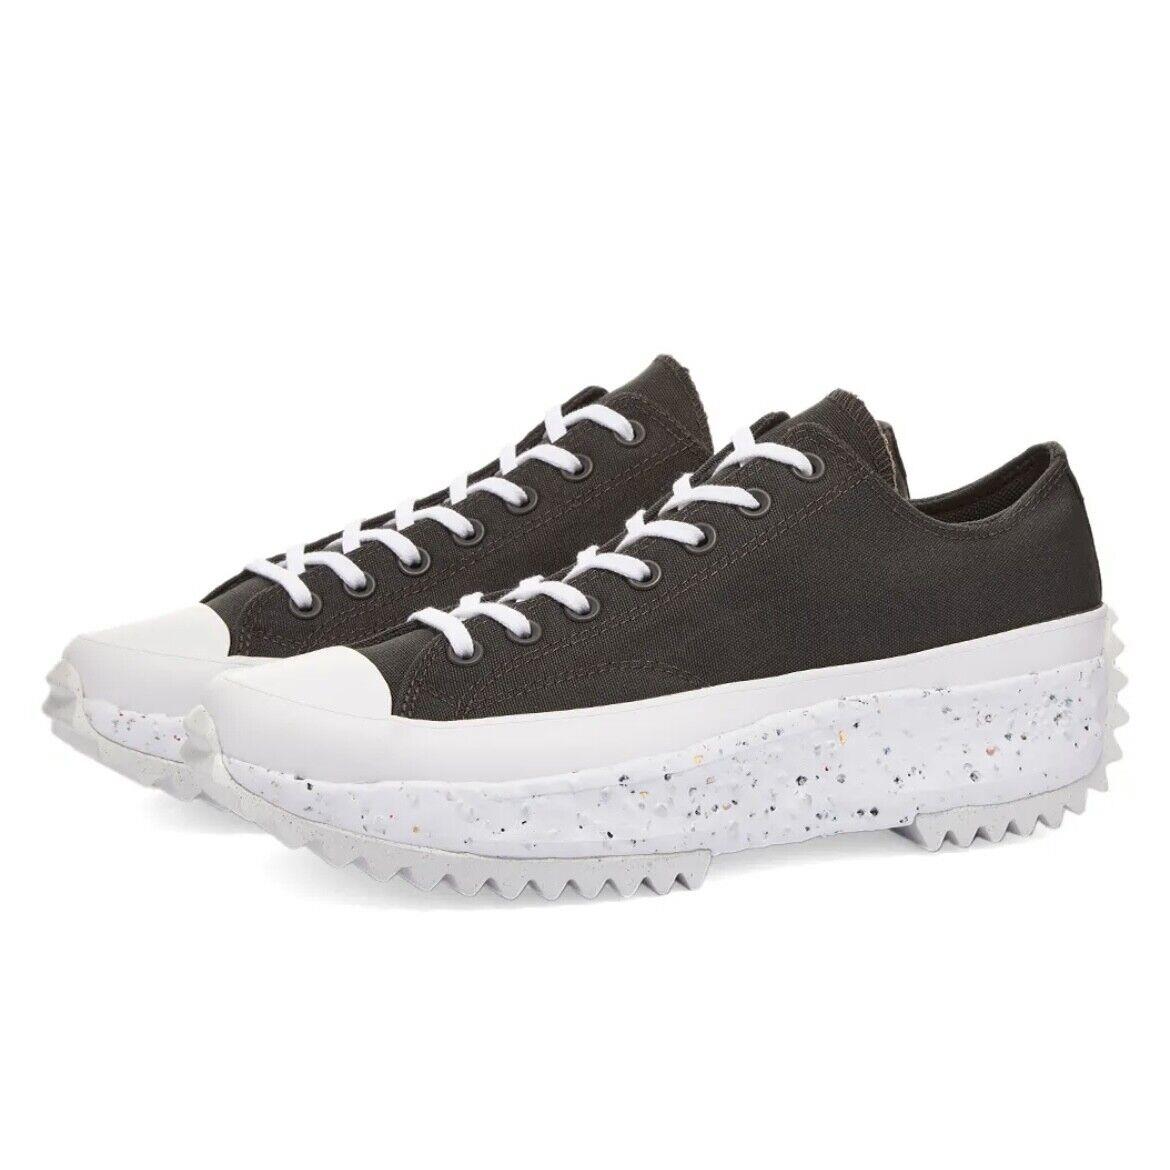 Converse Run Star Hike Crater OX Low Men Casual Fashion Shoe Gray White Sneaker